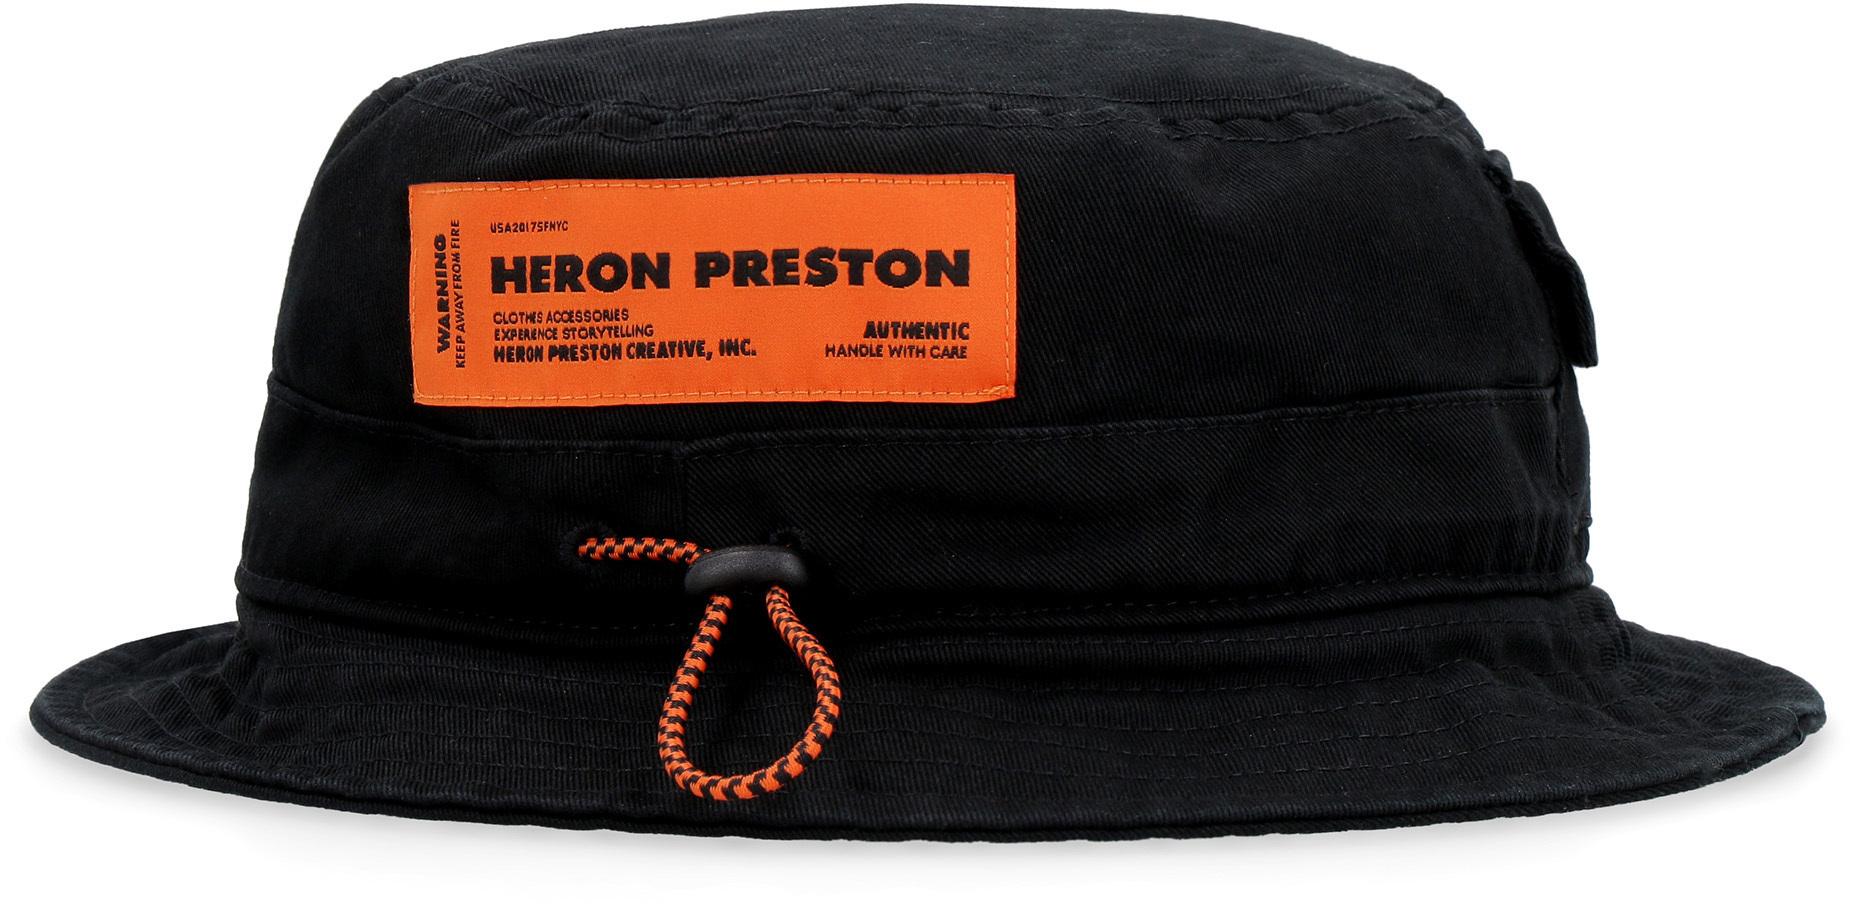 Heron Preston Cotton Bucket Hat in Black for Men - Lyst